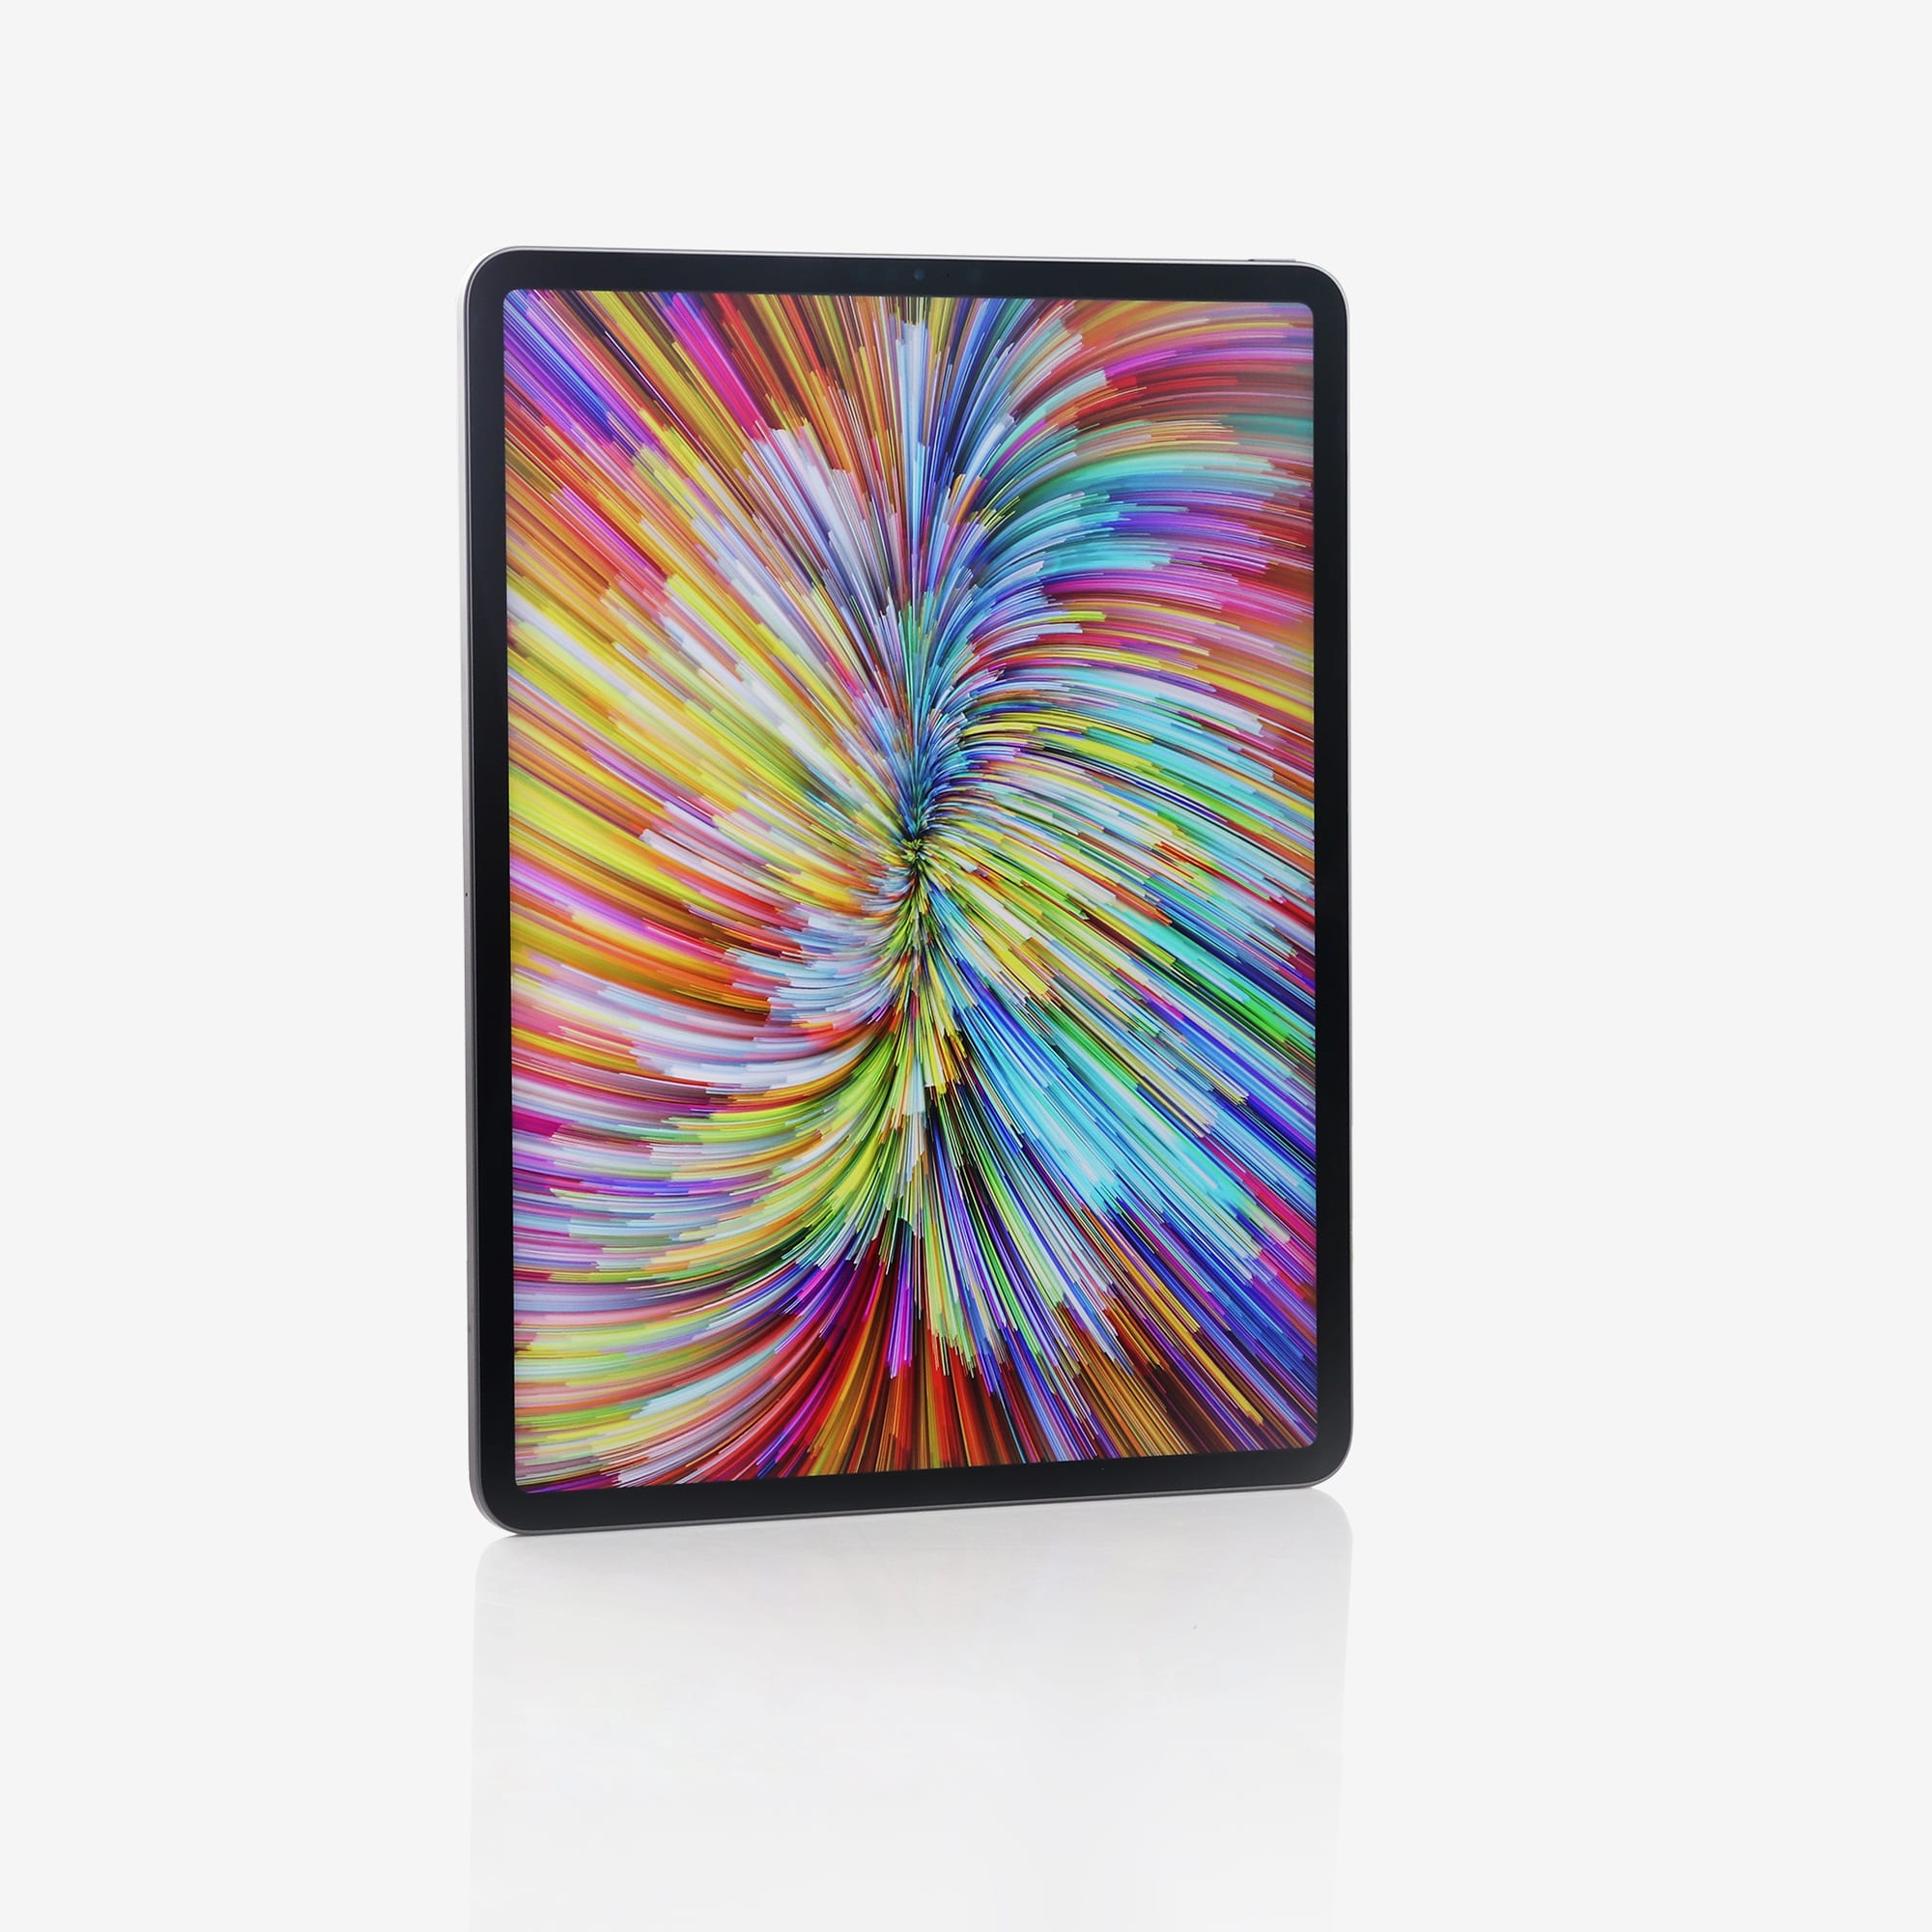 1 x iPad Pro (12.9-inch, 3rd generation, Wi-Fi + Cellular) Space Grey (2018)